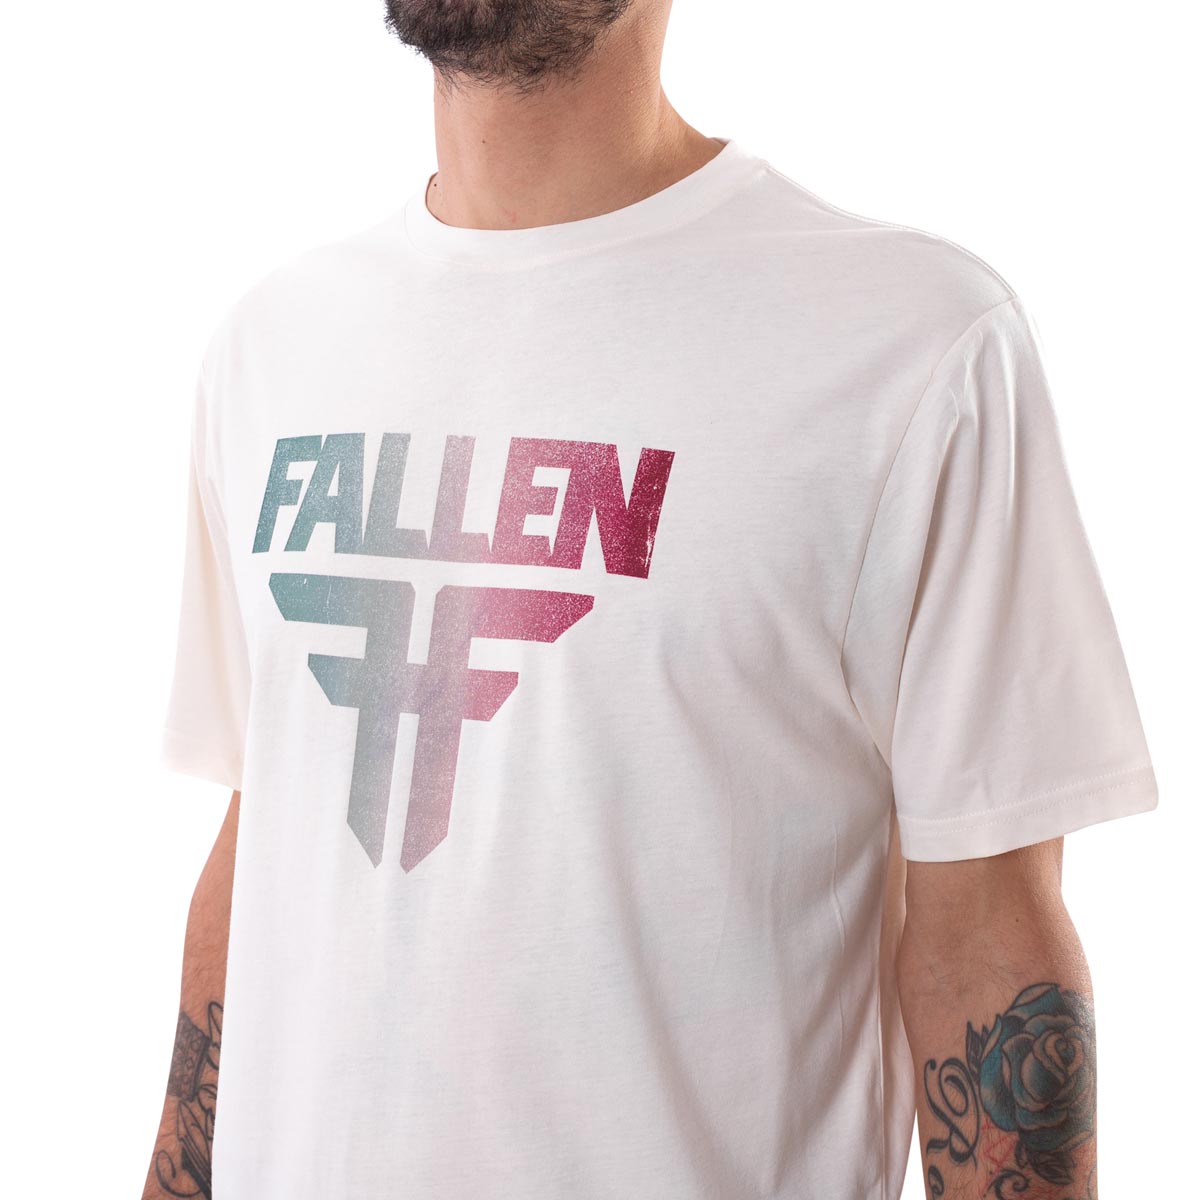 Fallen Insignia T-Shirt - Off White/Green image 3